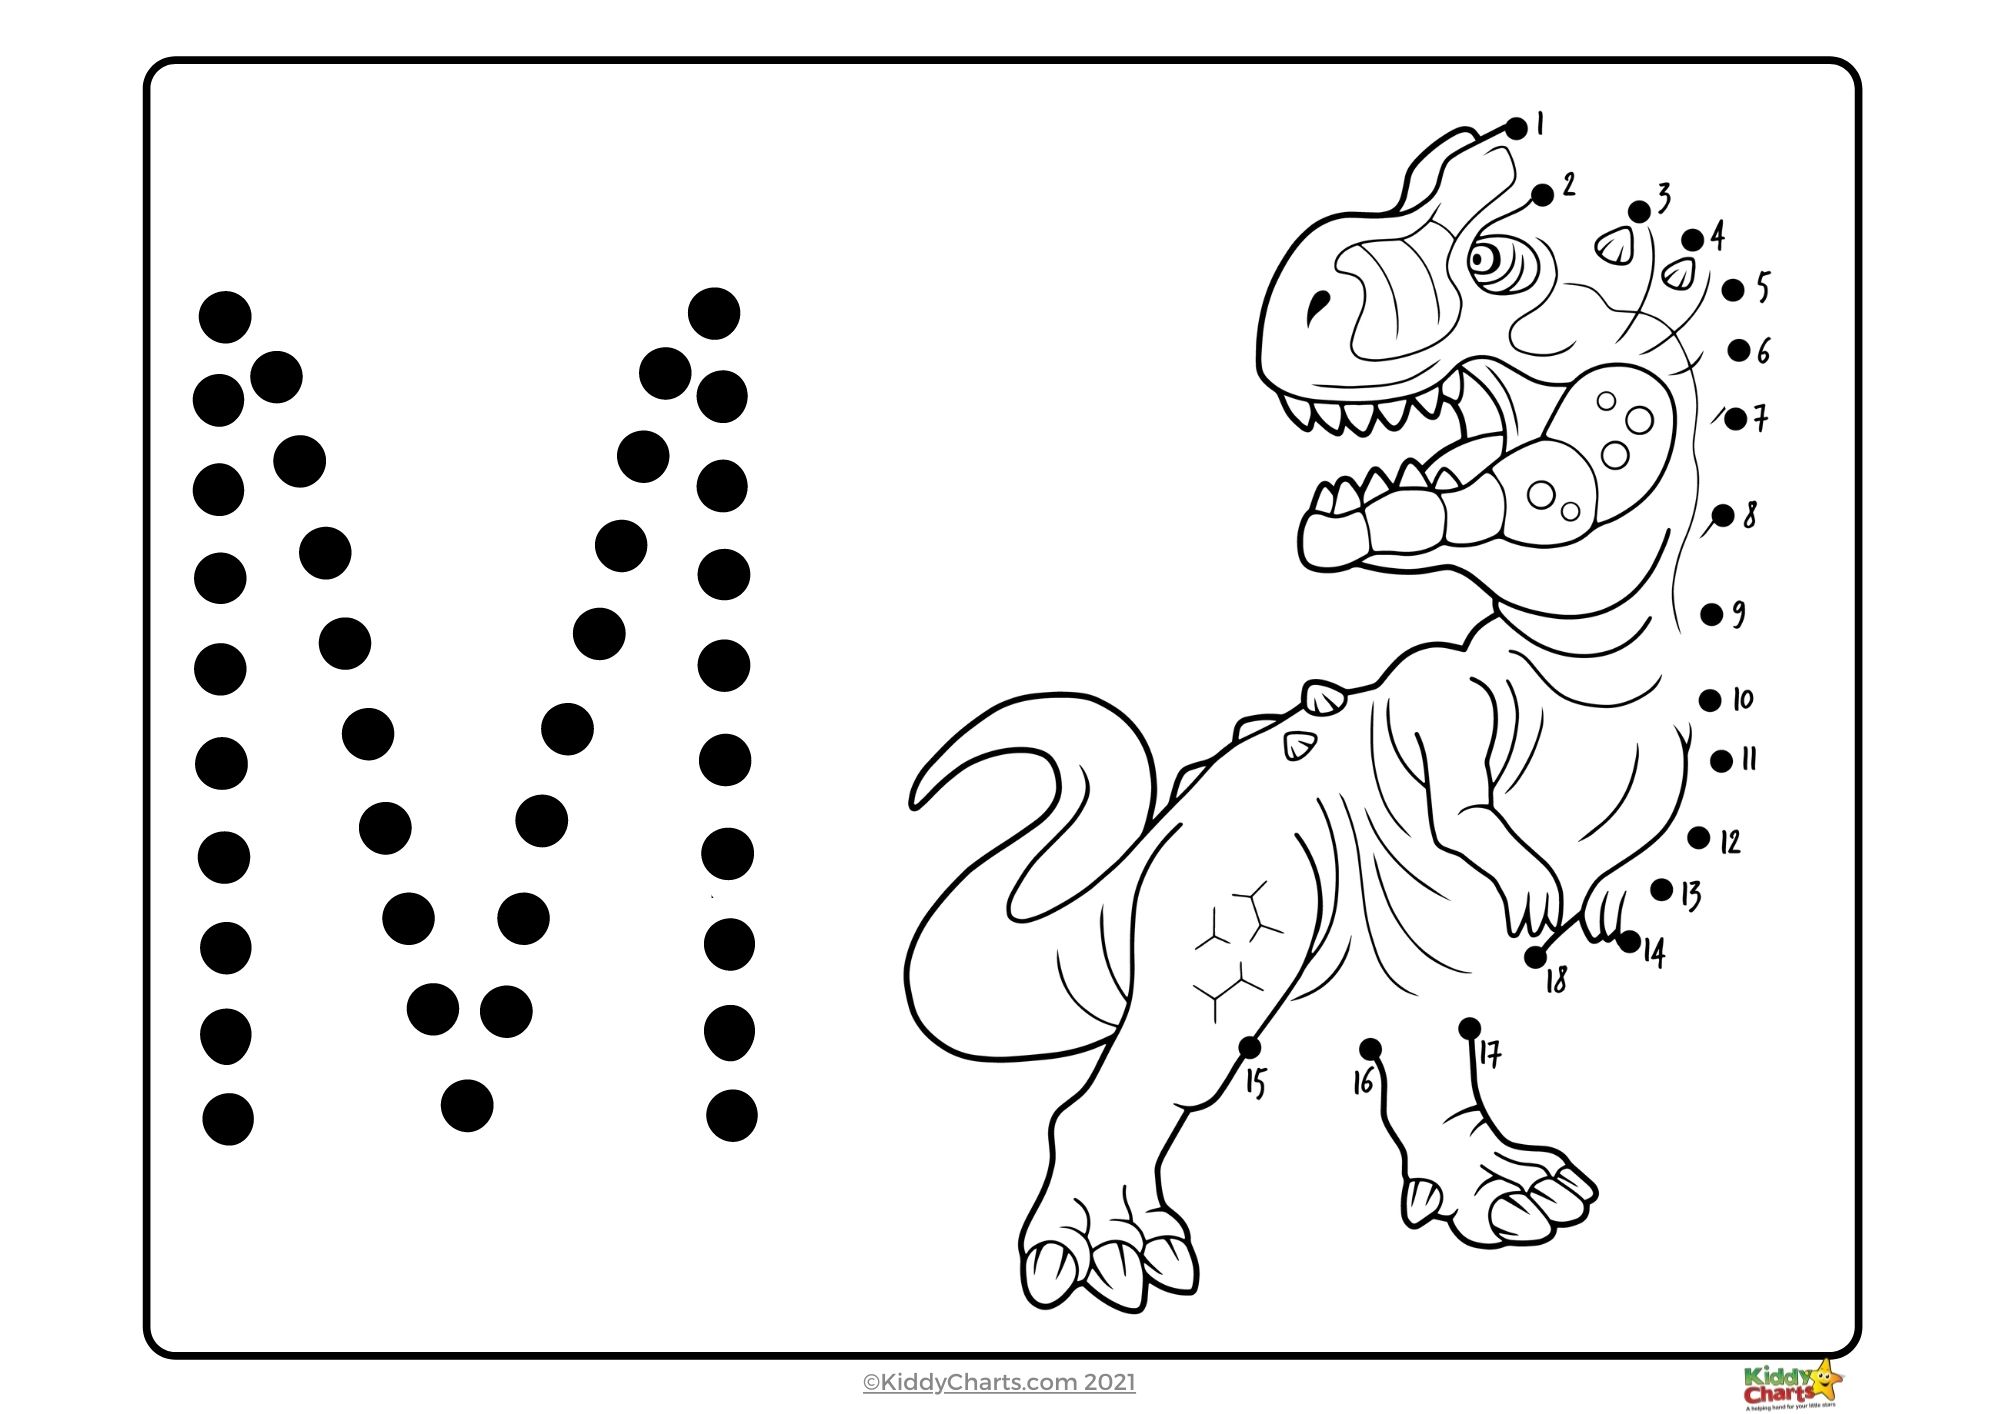 Dot to dot printables dinosaur and alphabet dot to dot